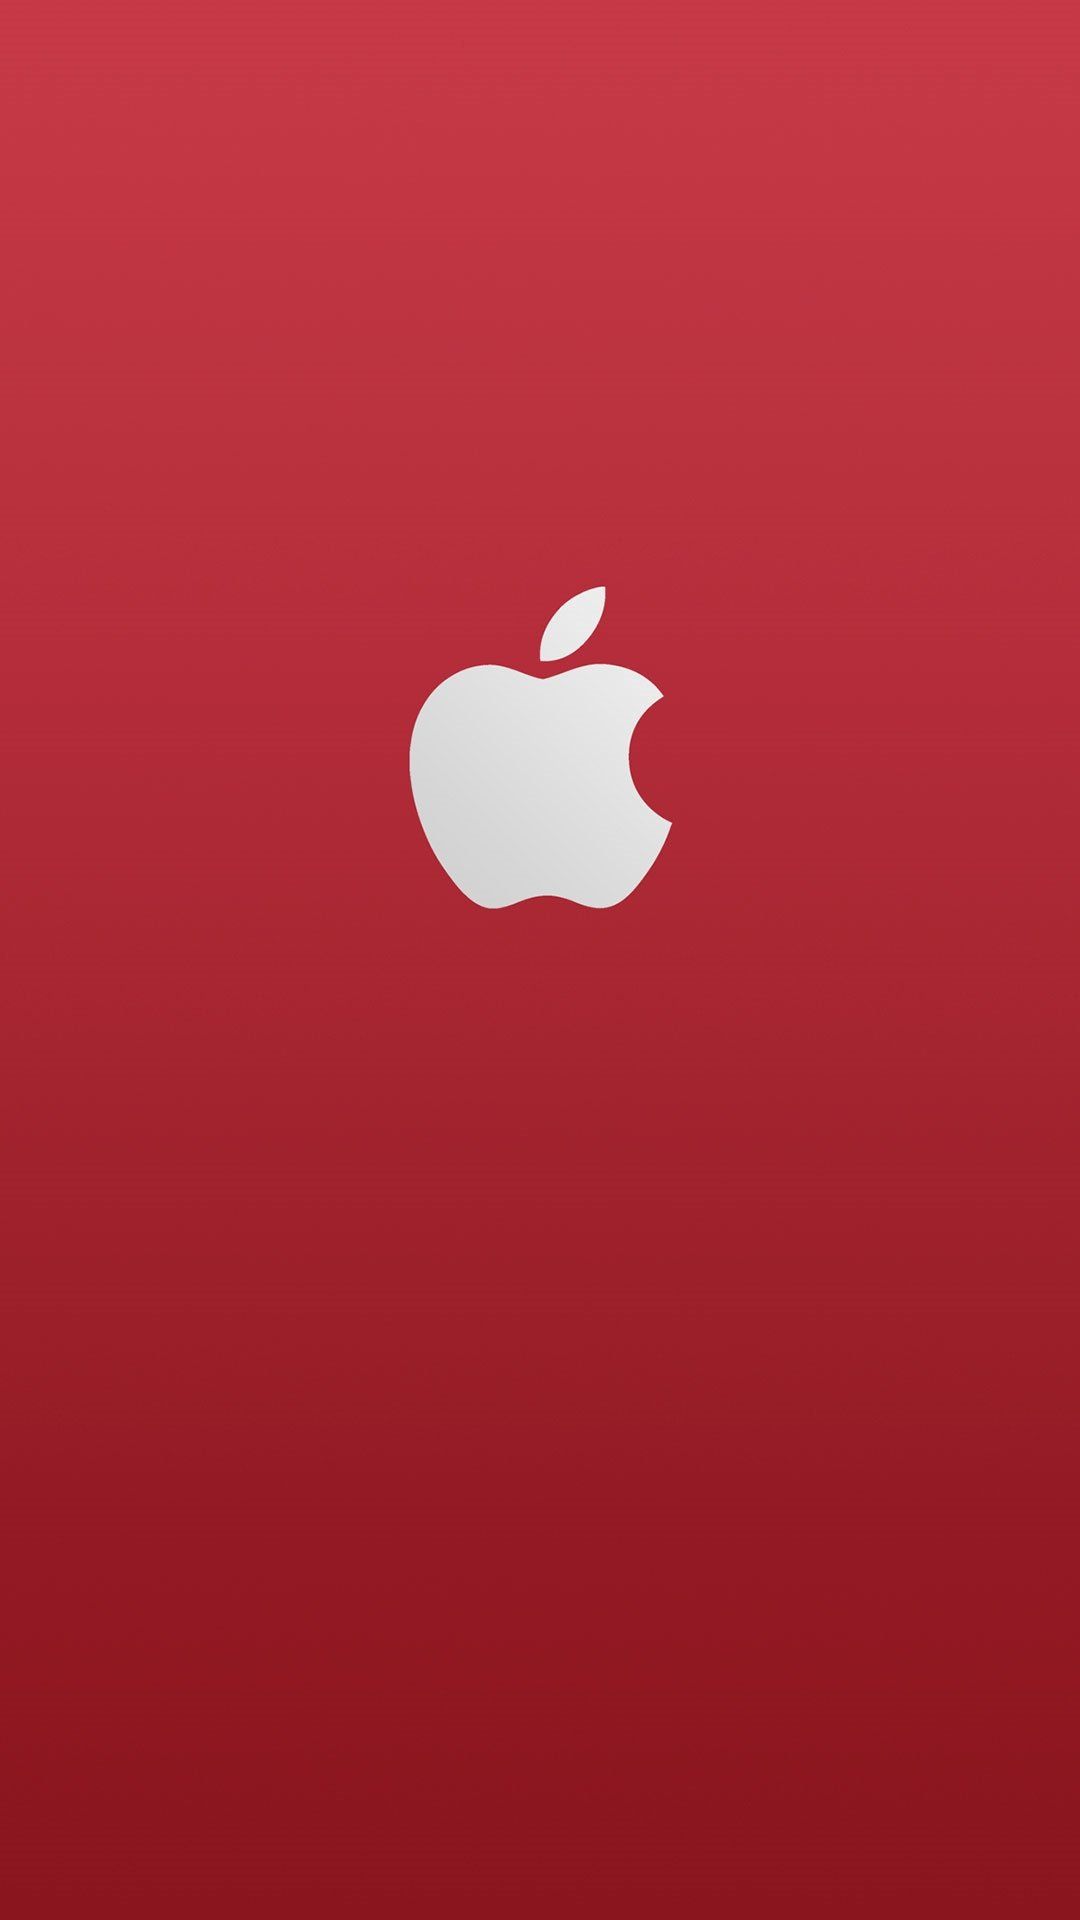 Apple Logo Wallpaper 4k For iPhones